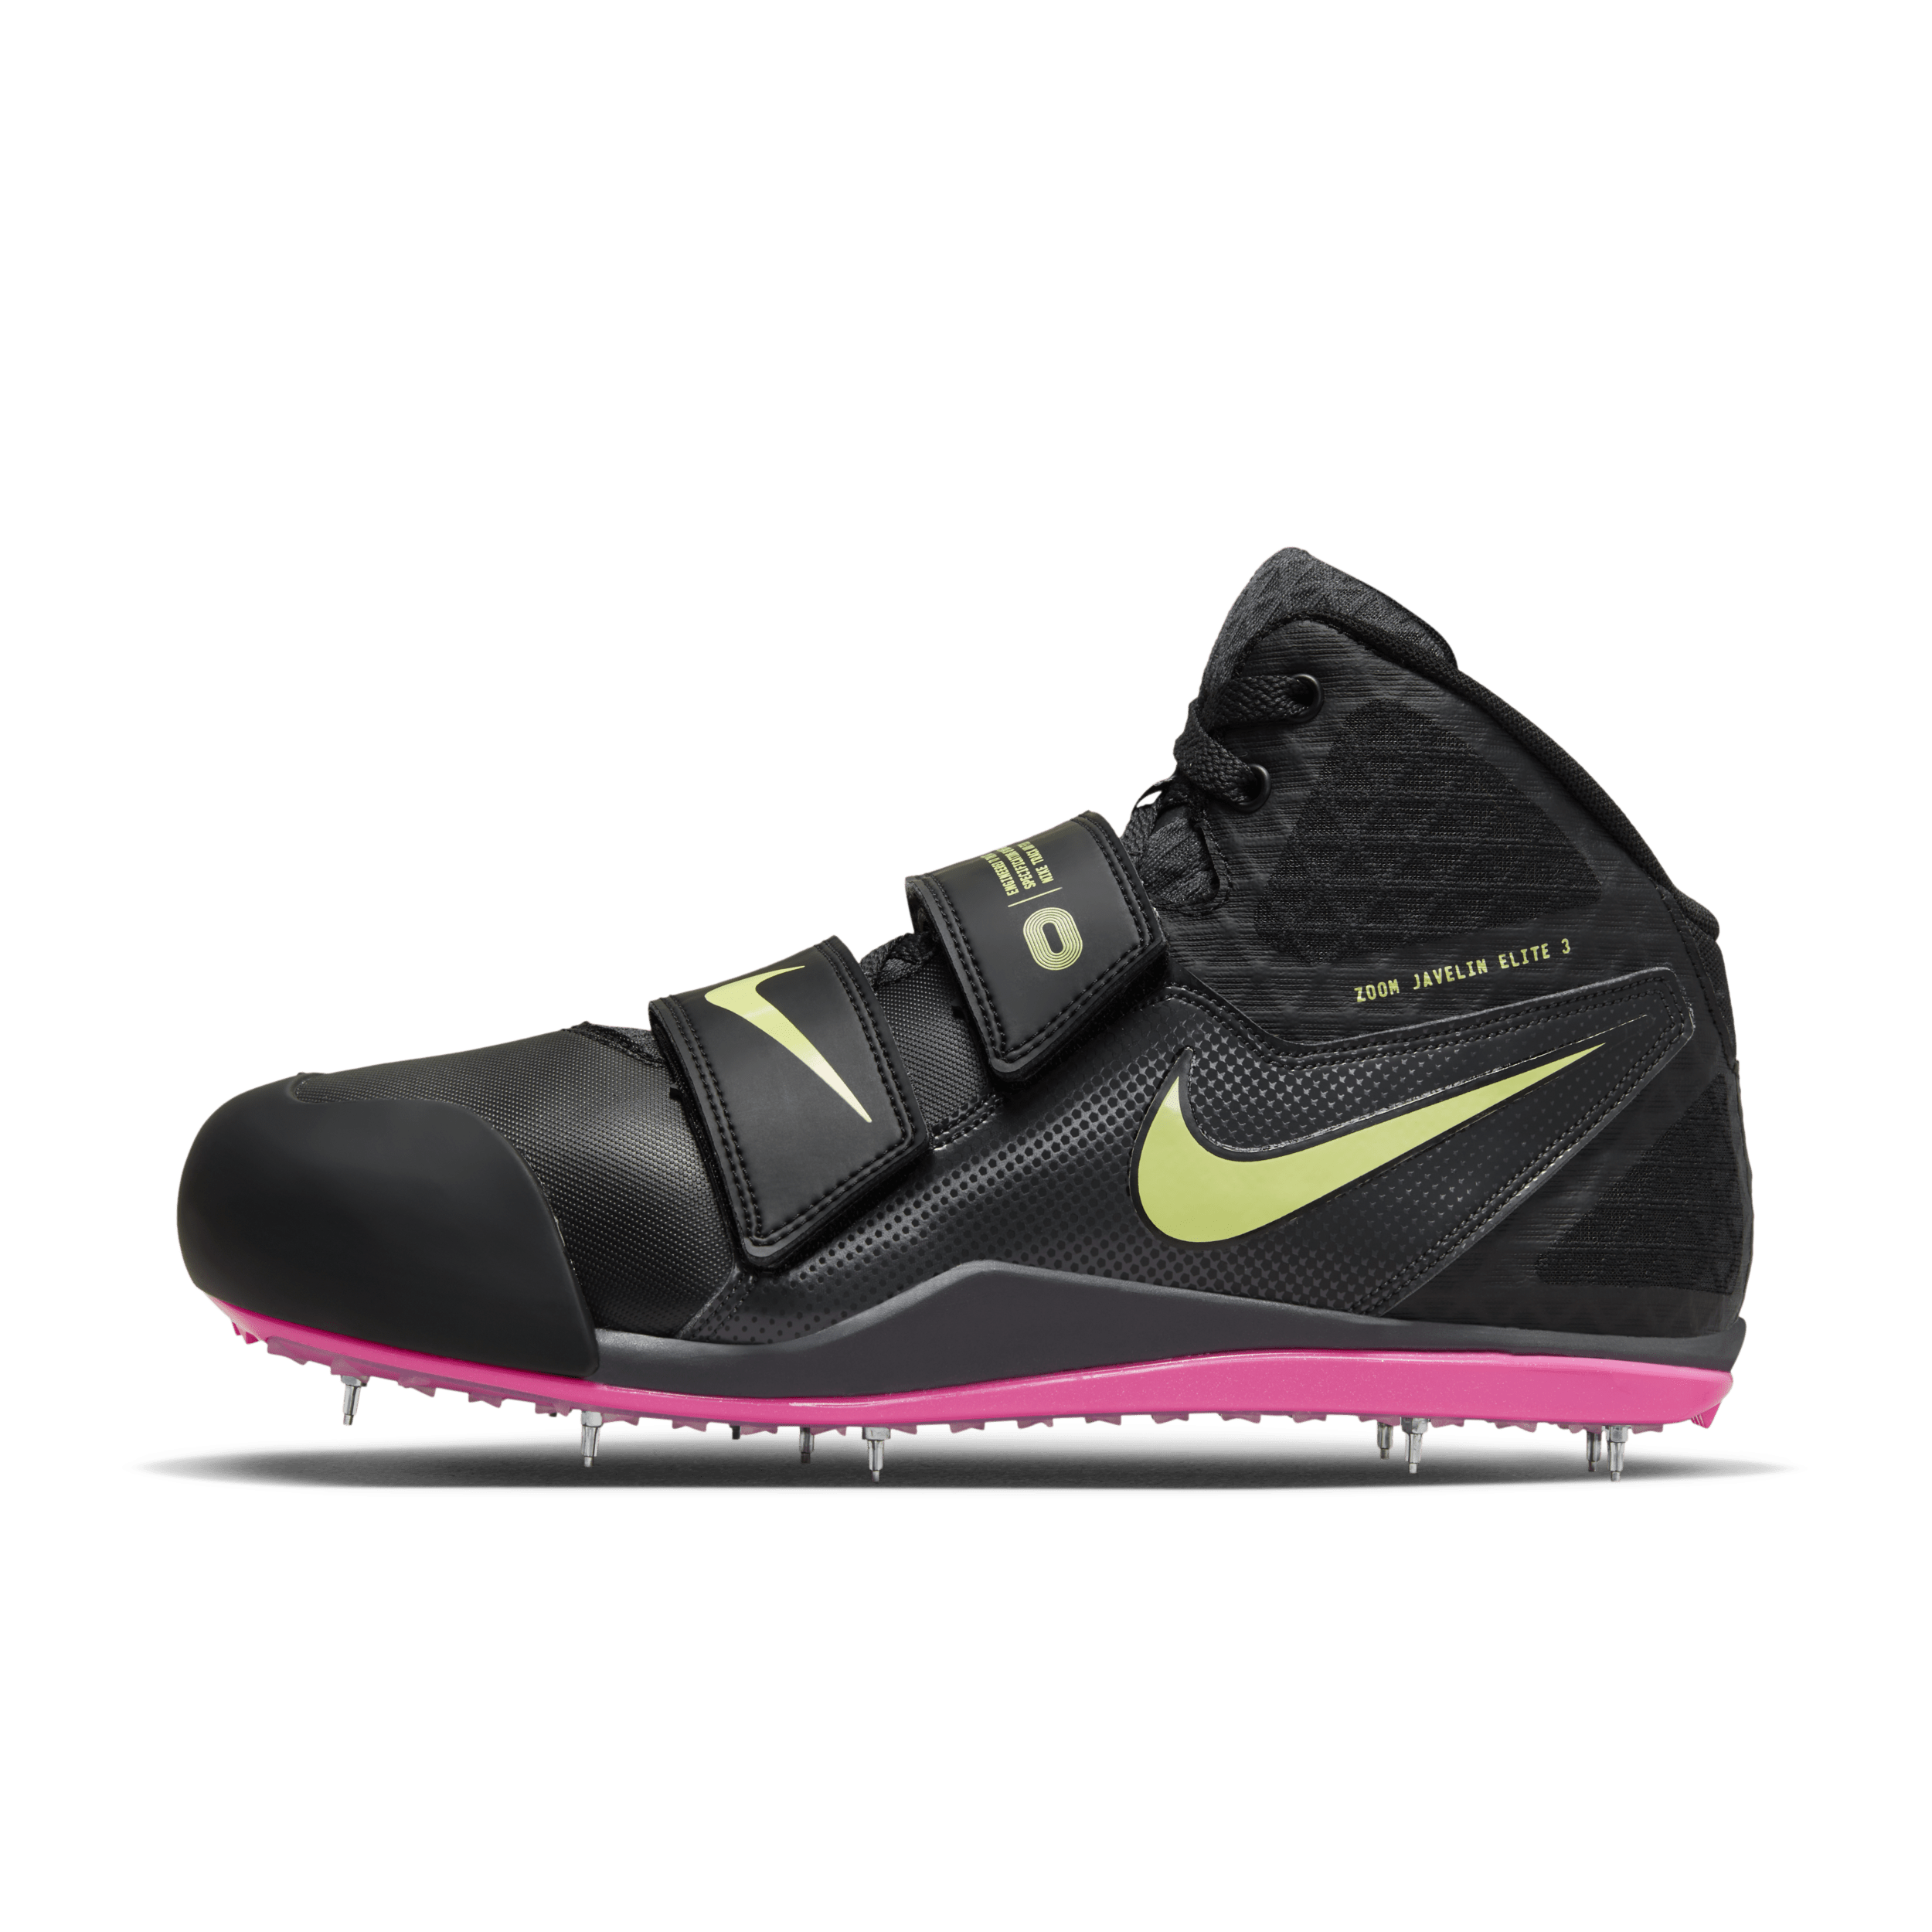 Scarpa chiodata per il lancio Nike Zoom Javelin Elite 3 - Nero